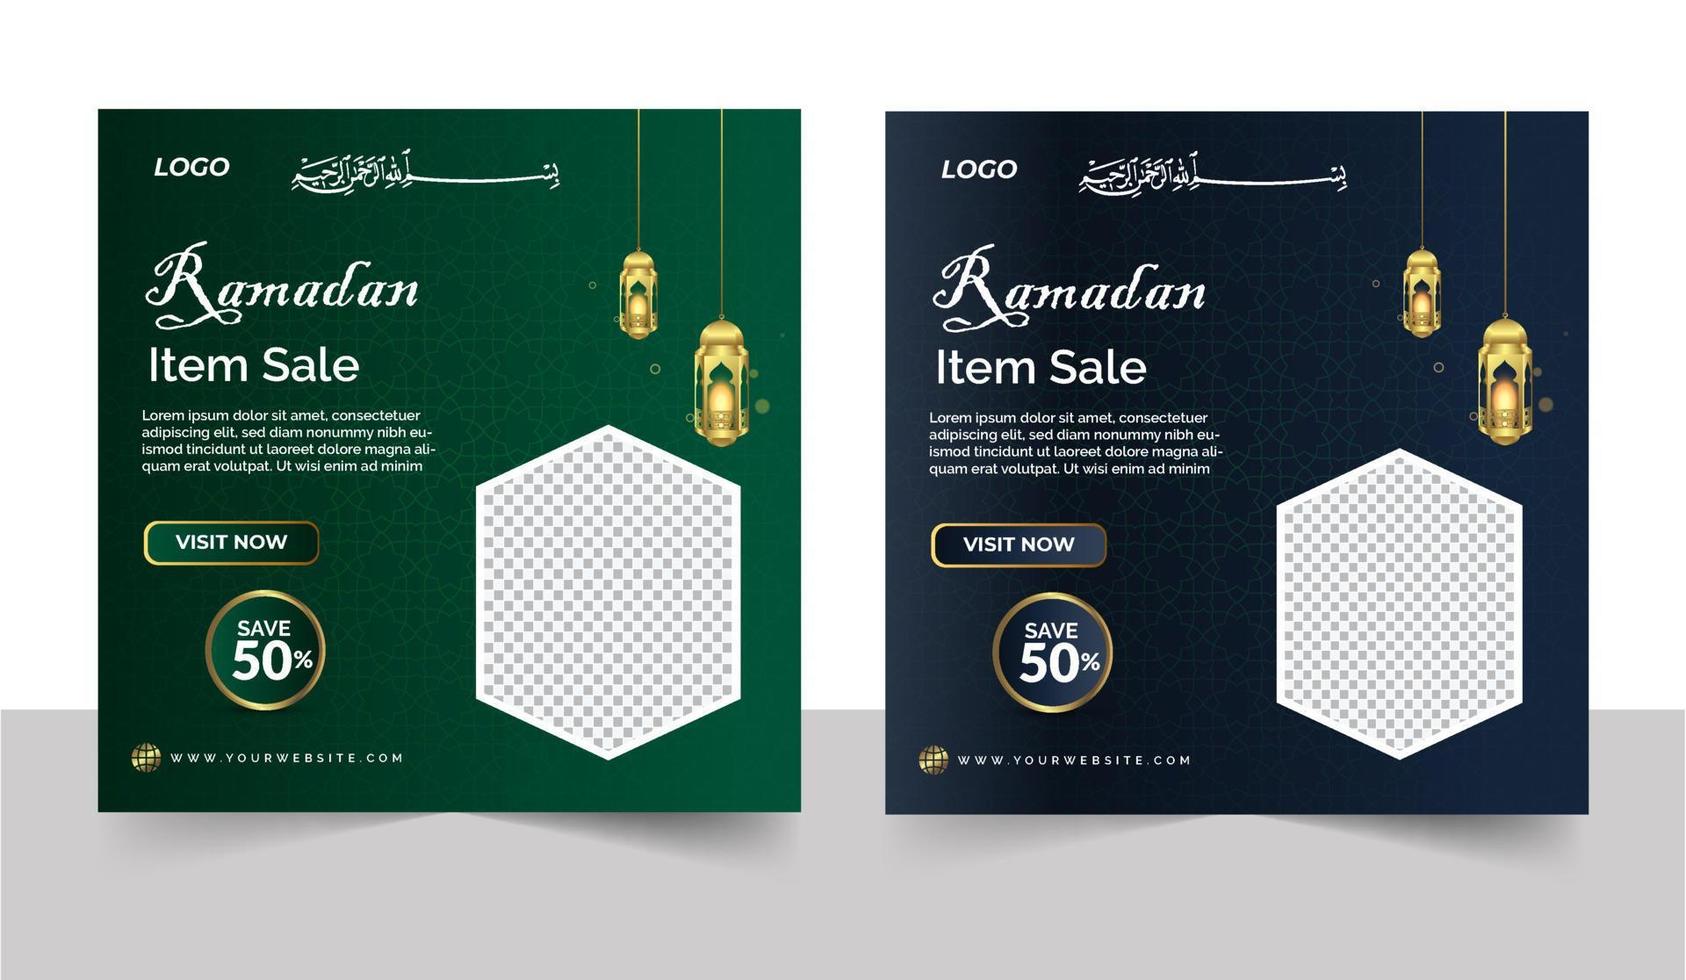 Ramadan item sale social media banner template vector